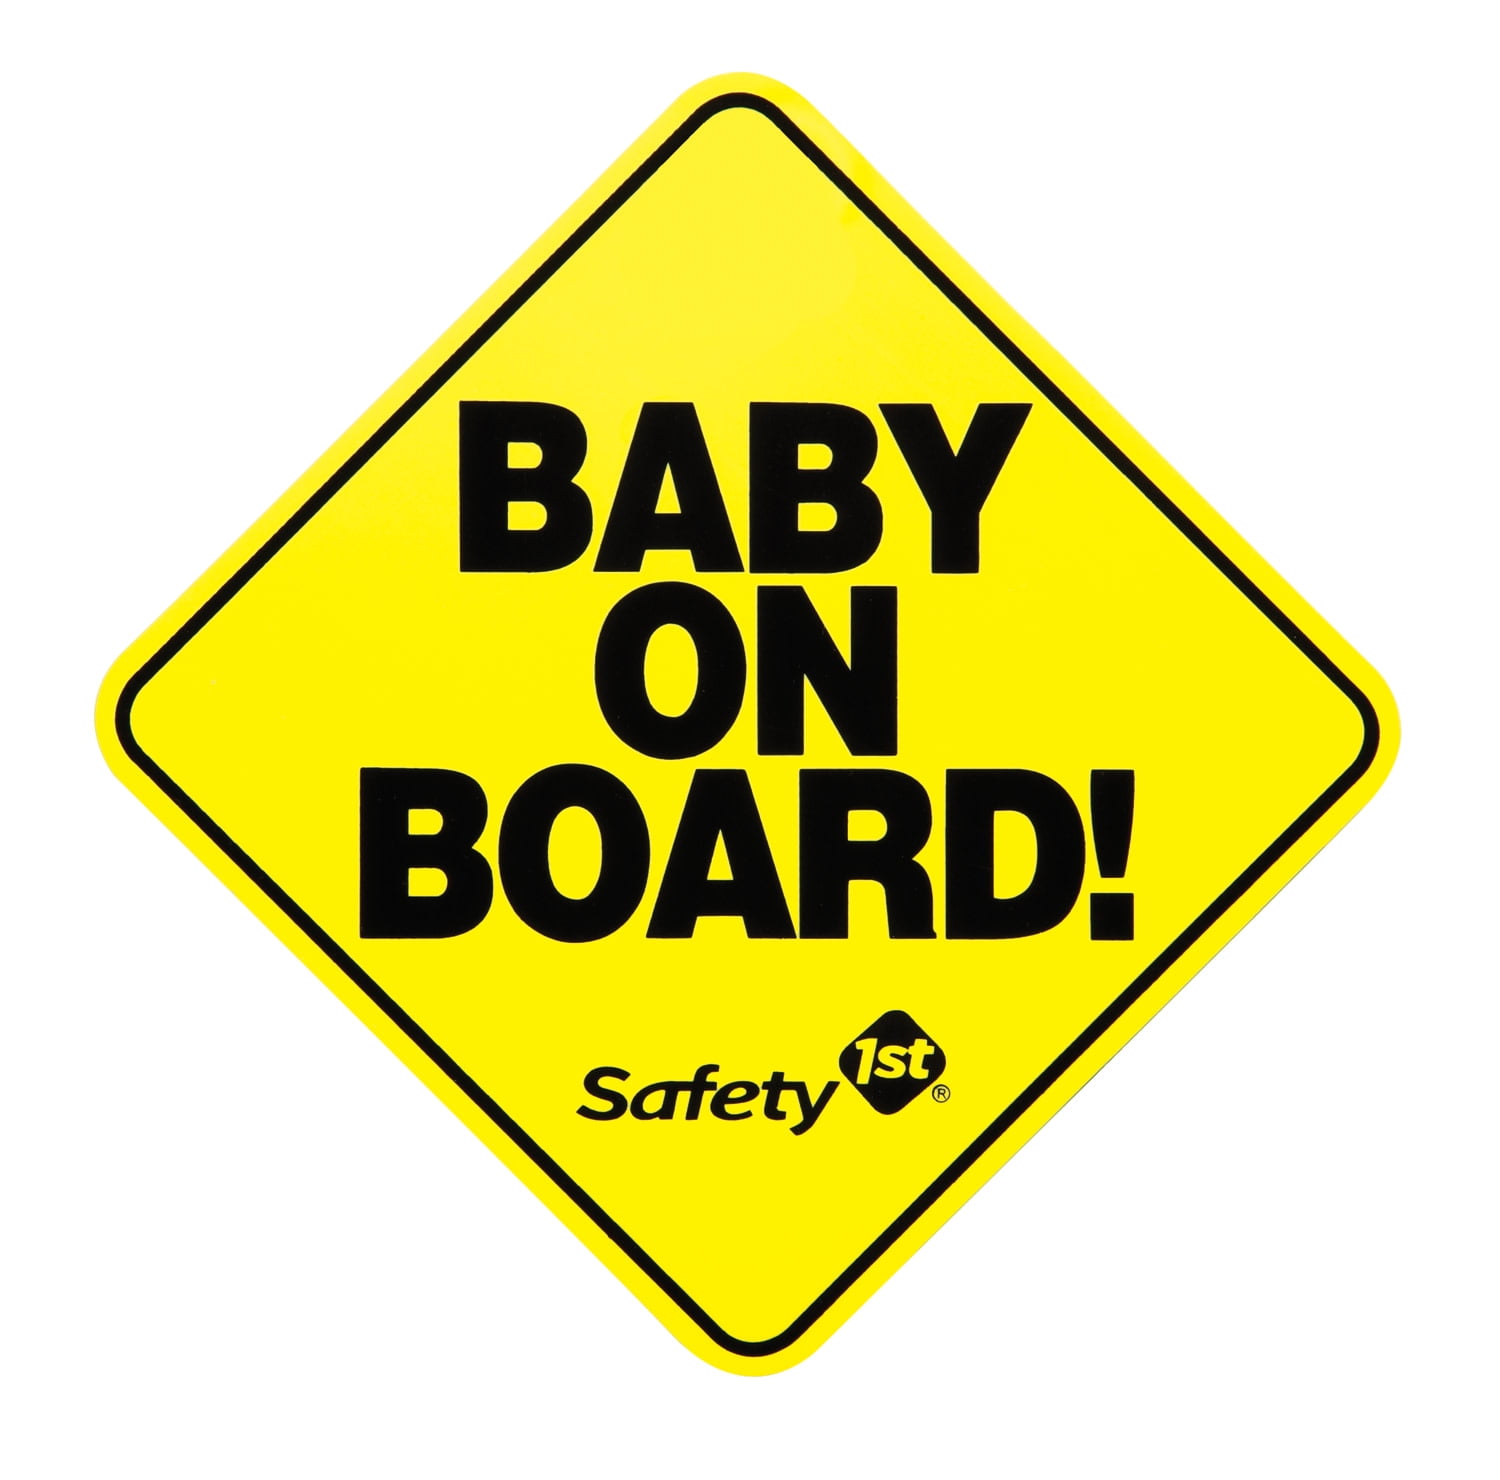 Kitty On Board Funny Warning Sign Car Bumper Sticker Decal 5" x 5" 